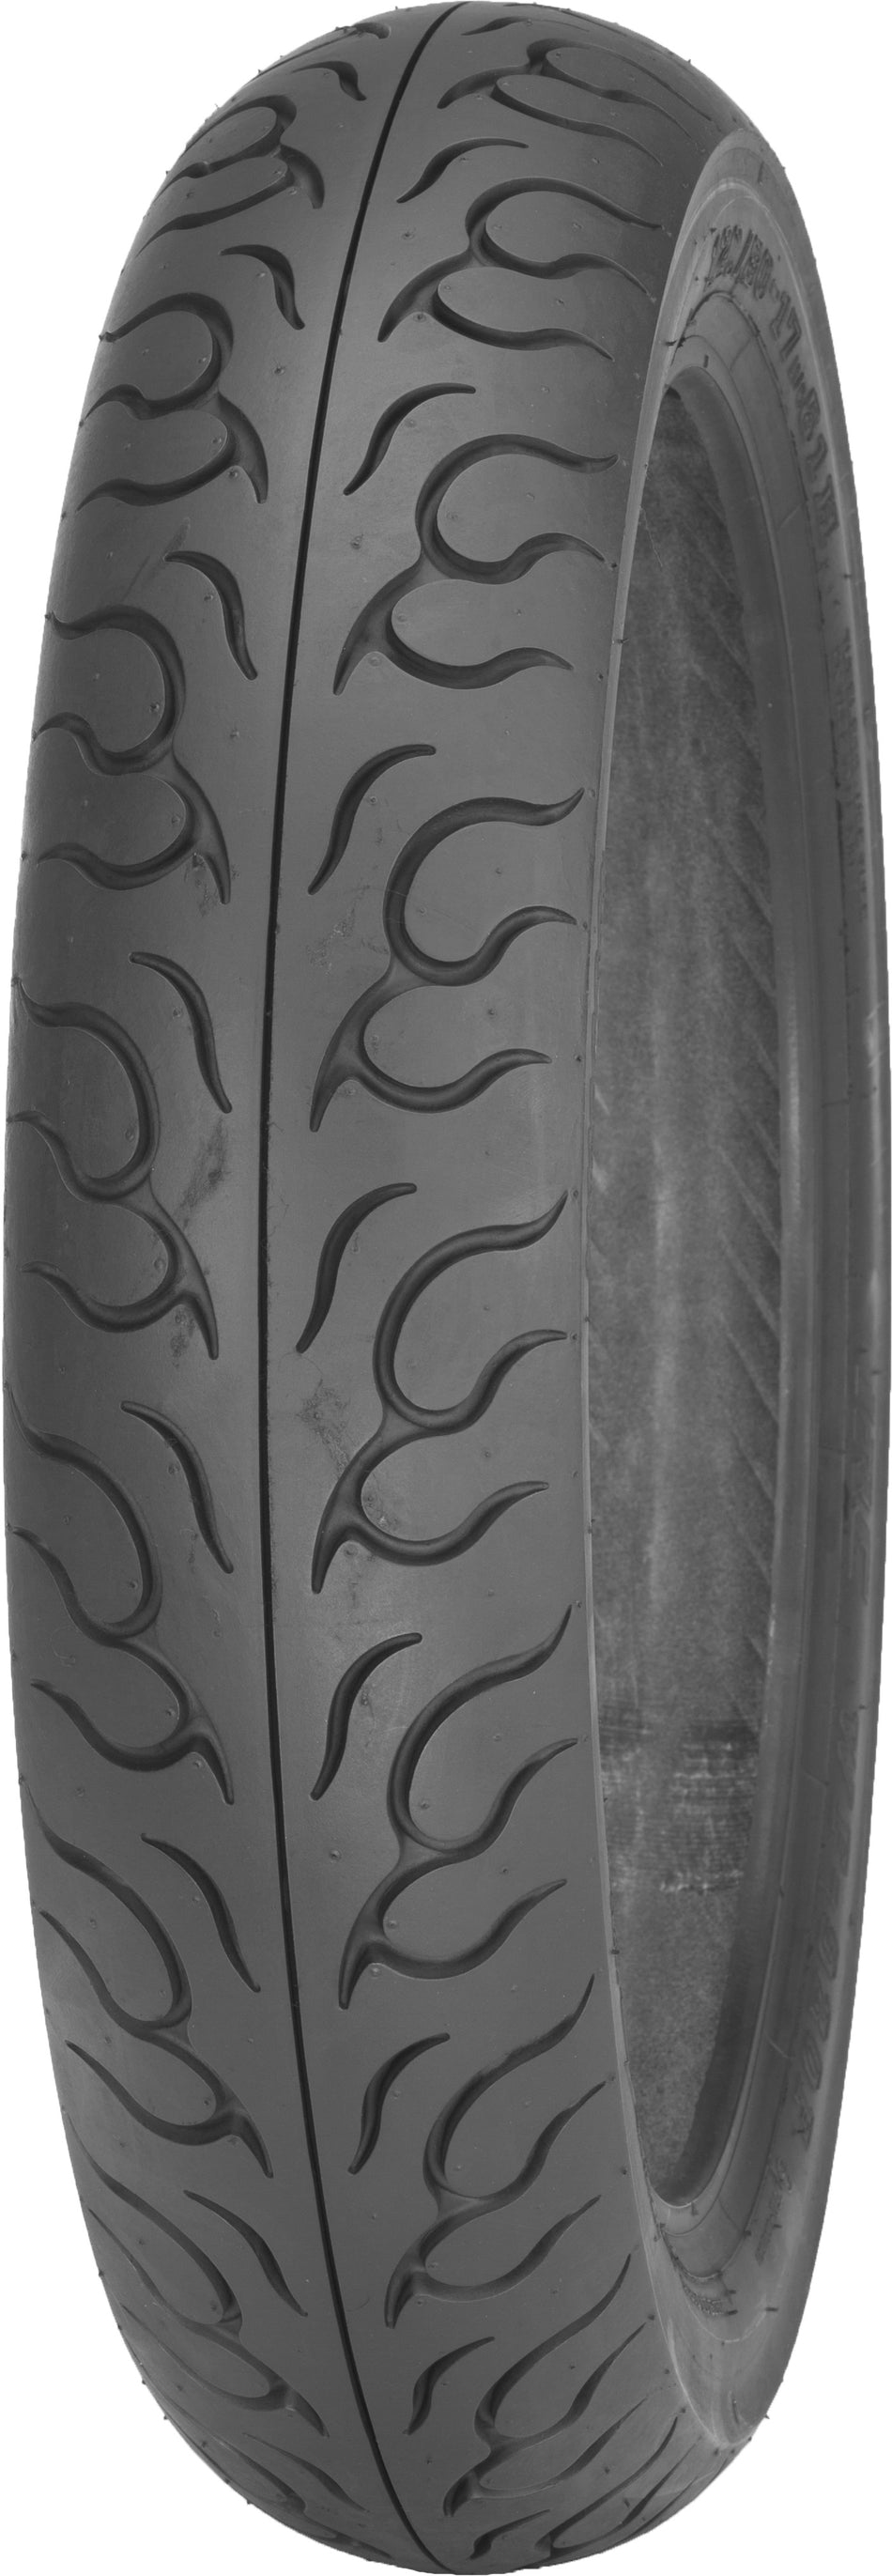 IRC Tire Wf-920 Front 120/80-17 61h Bias 302669